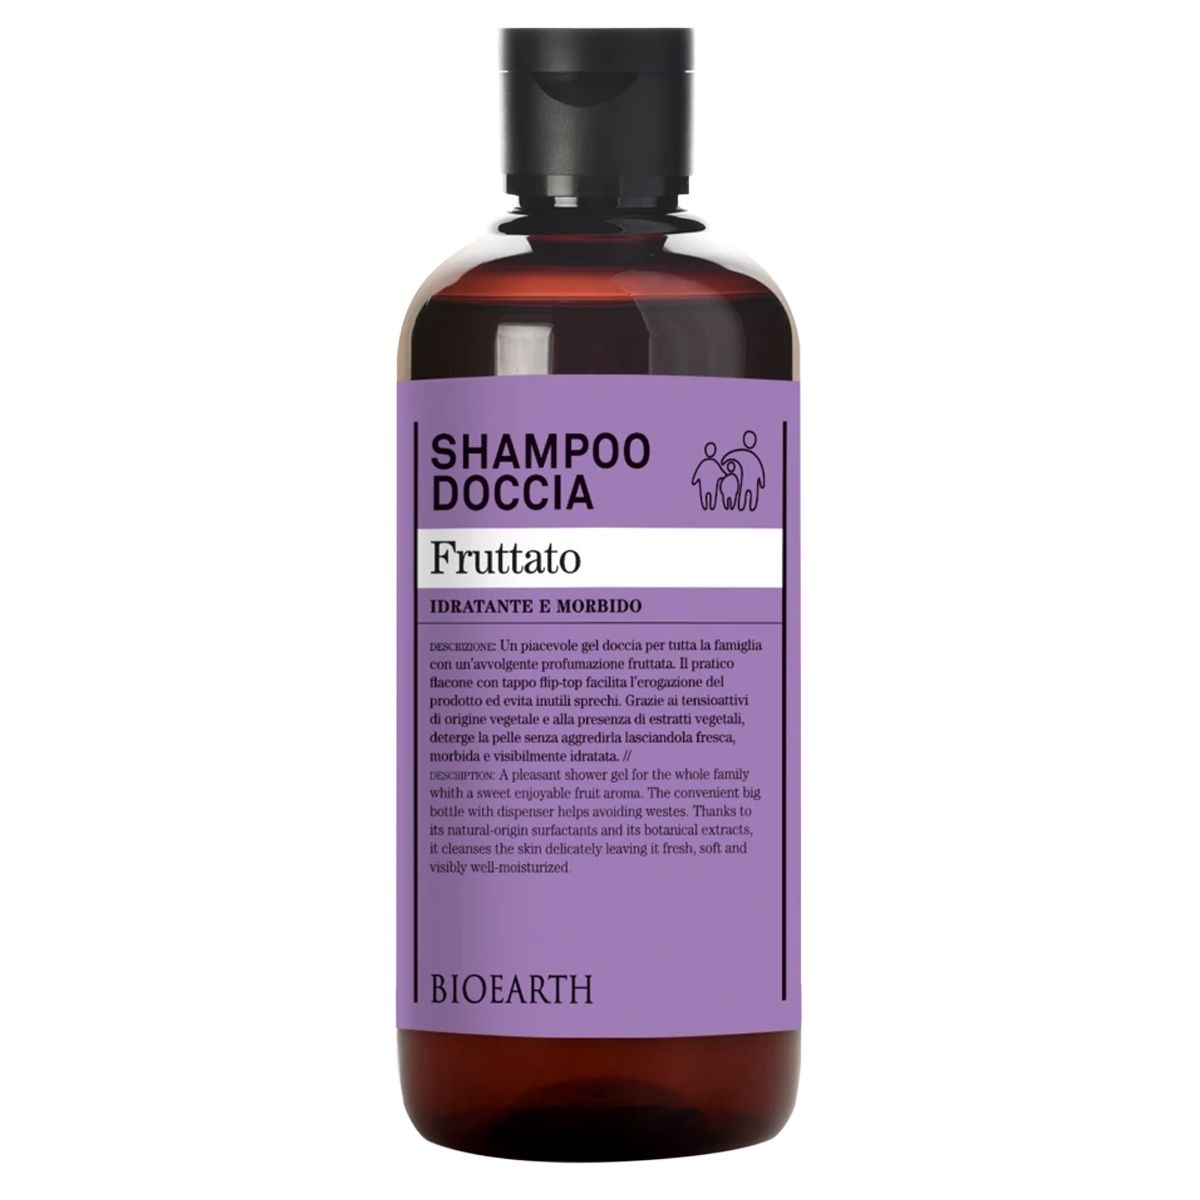 Bioearth Shampoo Doccia Fruttato 500ml